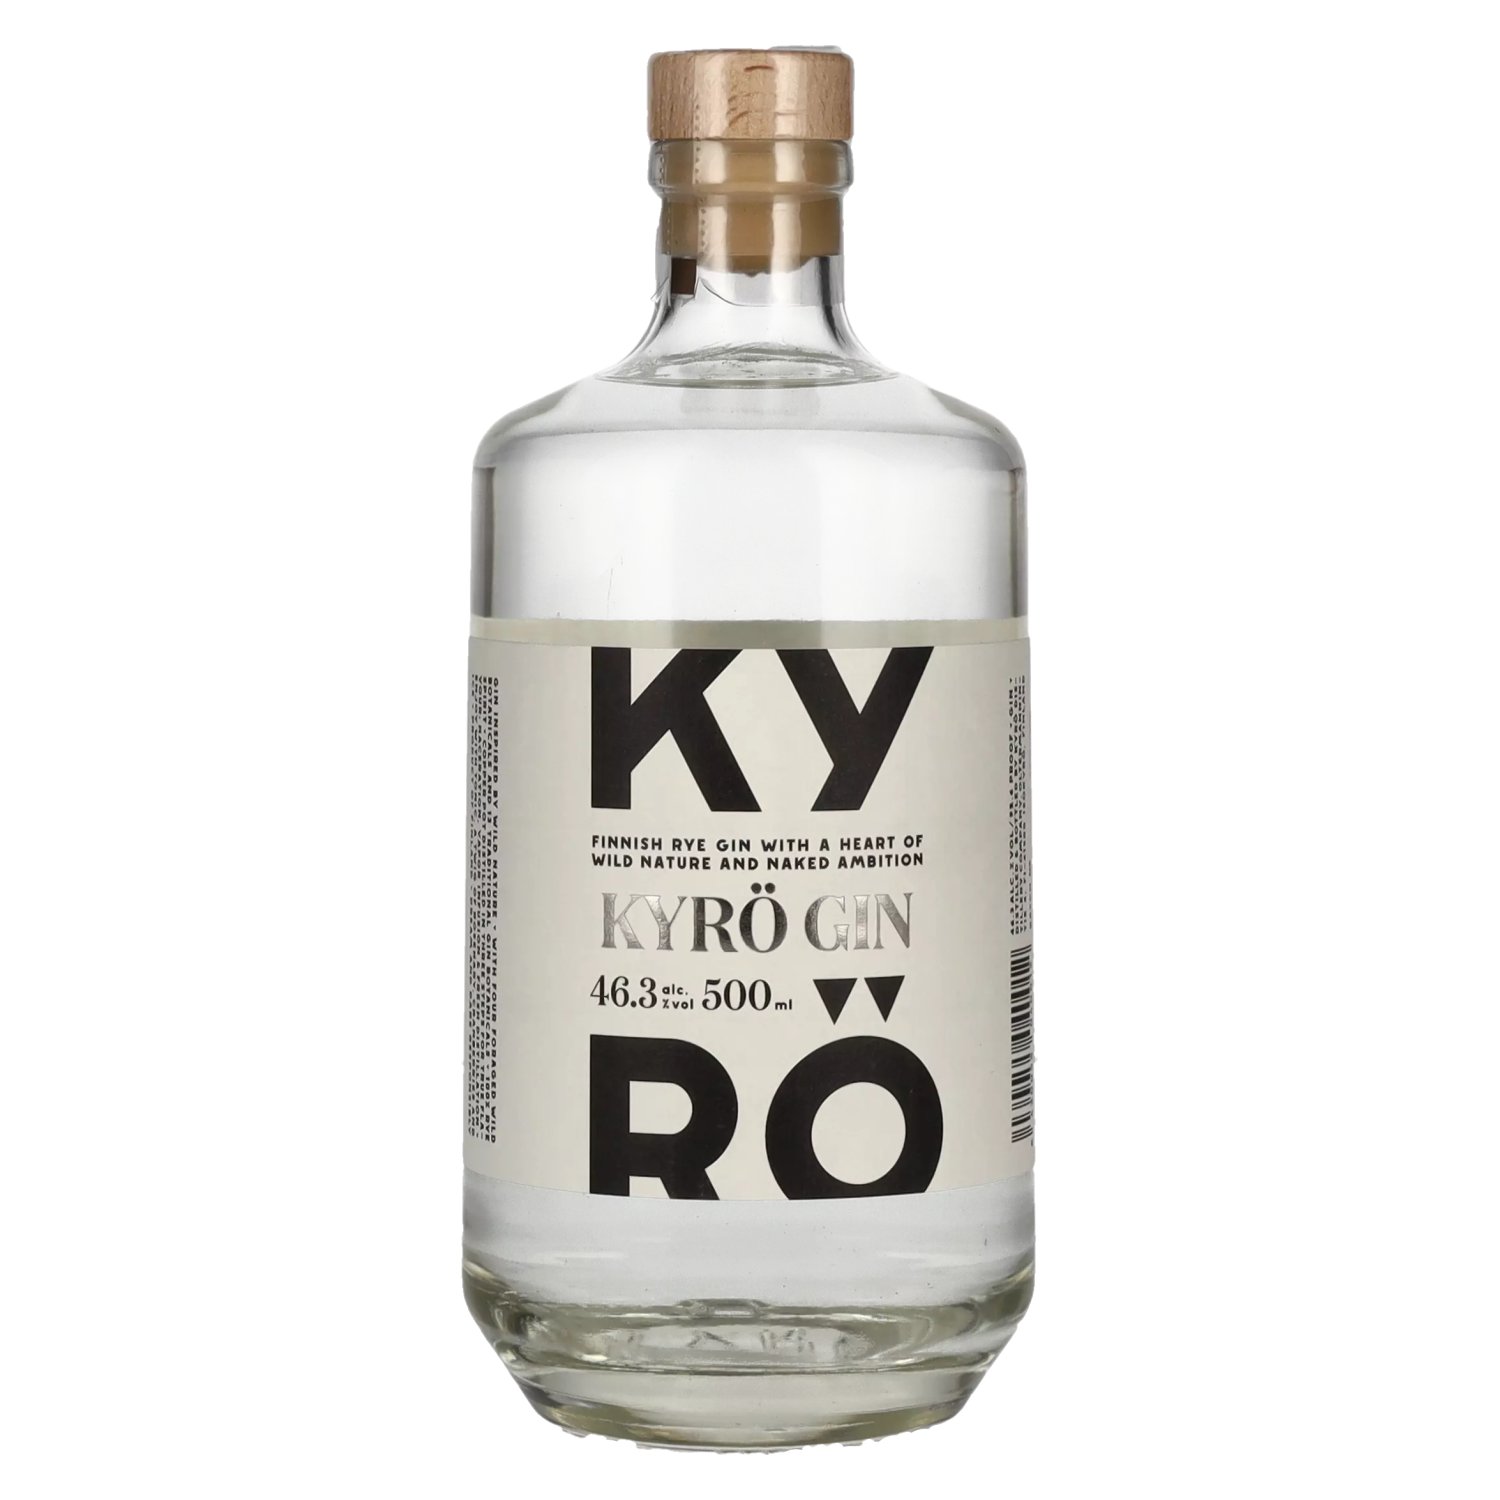 Kyrö Gin Rye Gin delicando 46,3% Vol. - 0,5l